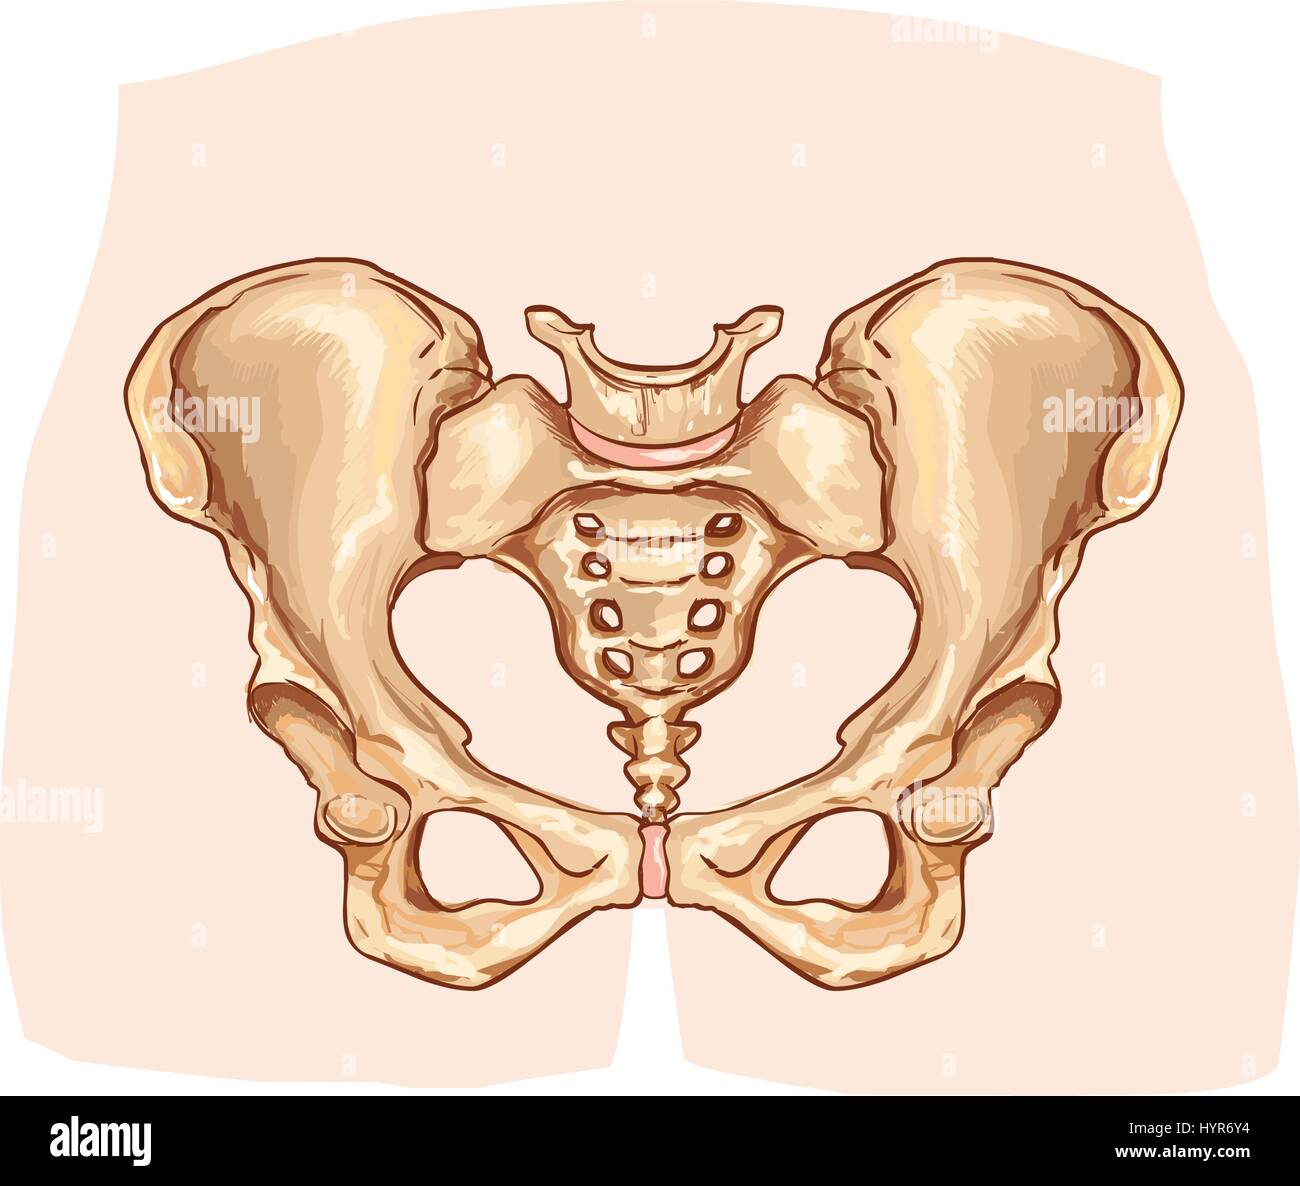 https://c8.alamy.com/comp/HYR6Y4/vector-illustration-of-a-diagram-of-the-pelvic-girdle-labeled-HYR6Y4.jpg